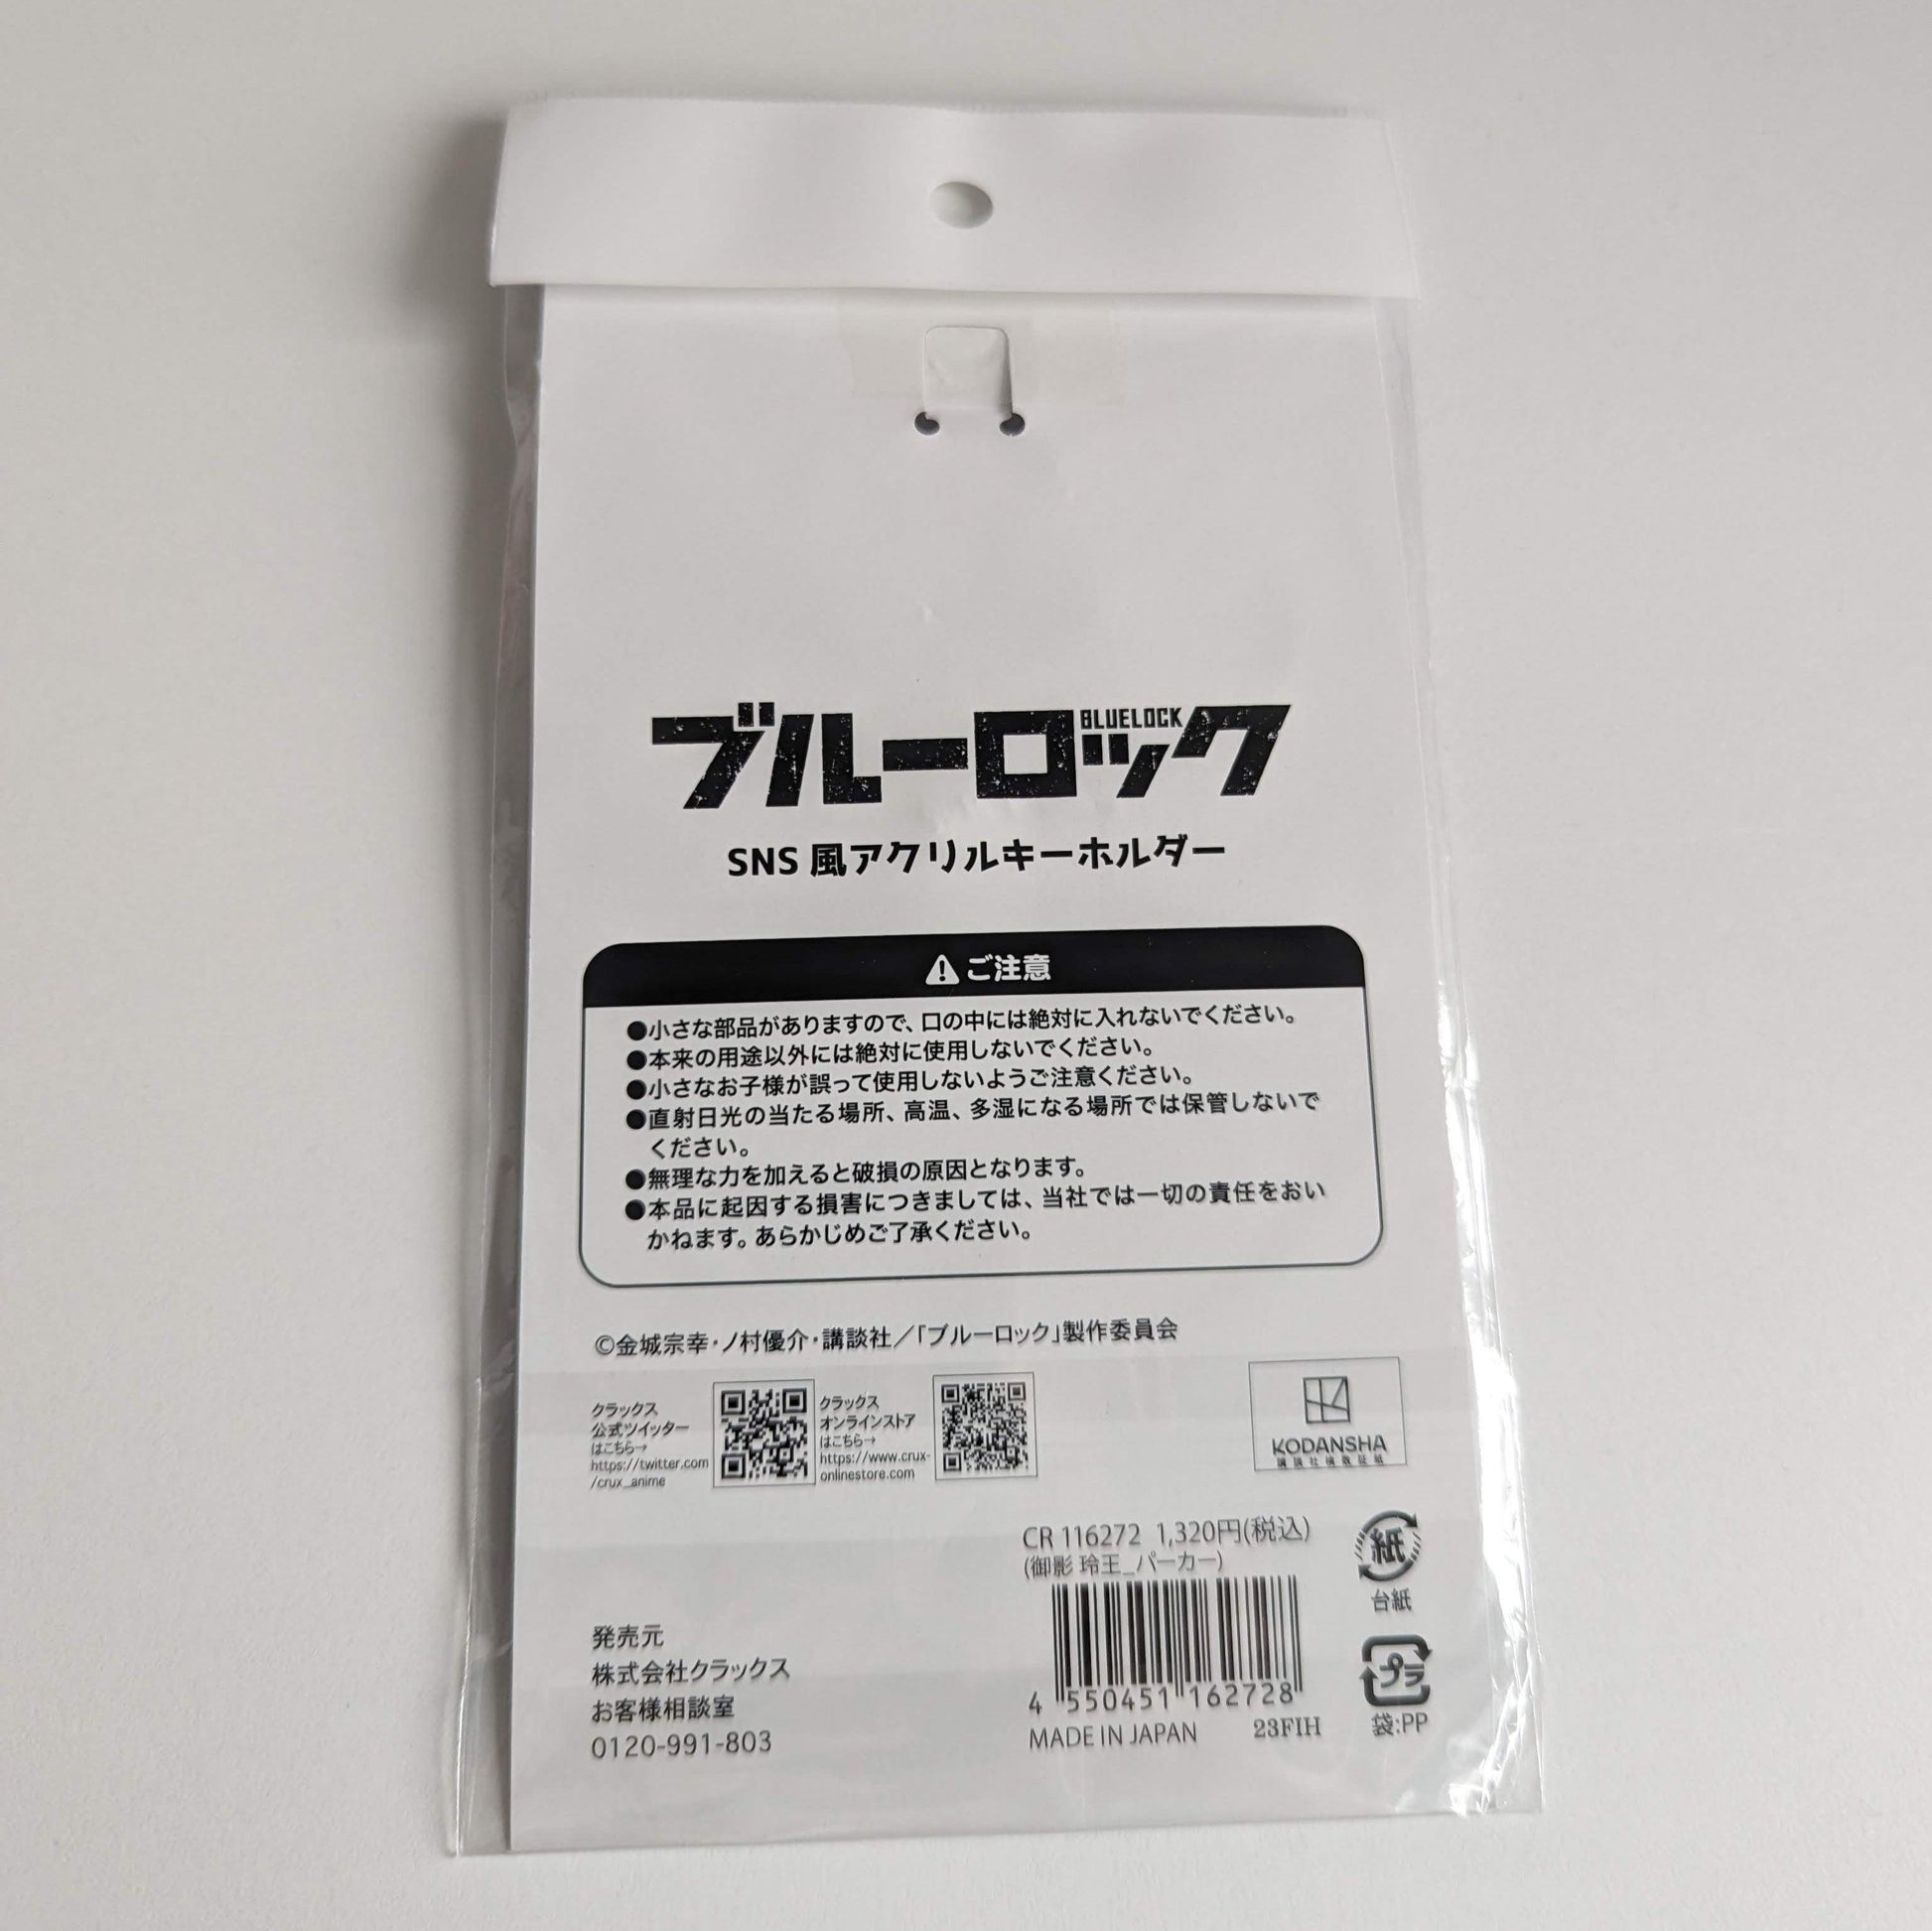 Blue Lock SNS Style Acrylic Keyholder - Reo Mikage - Moko's Boutique